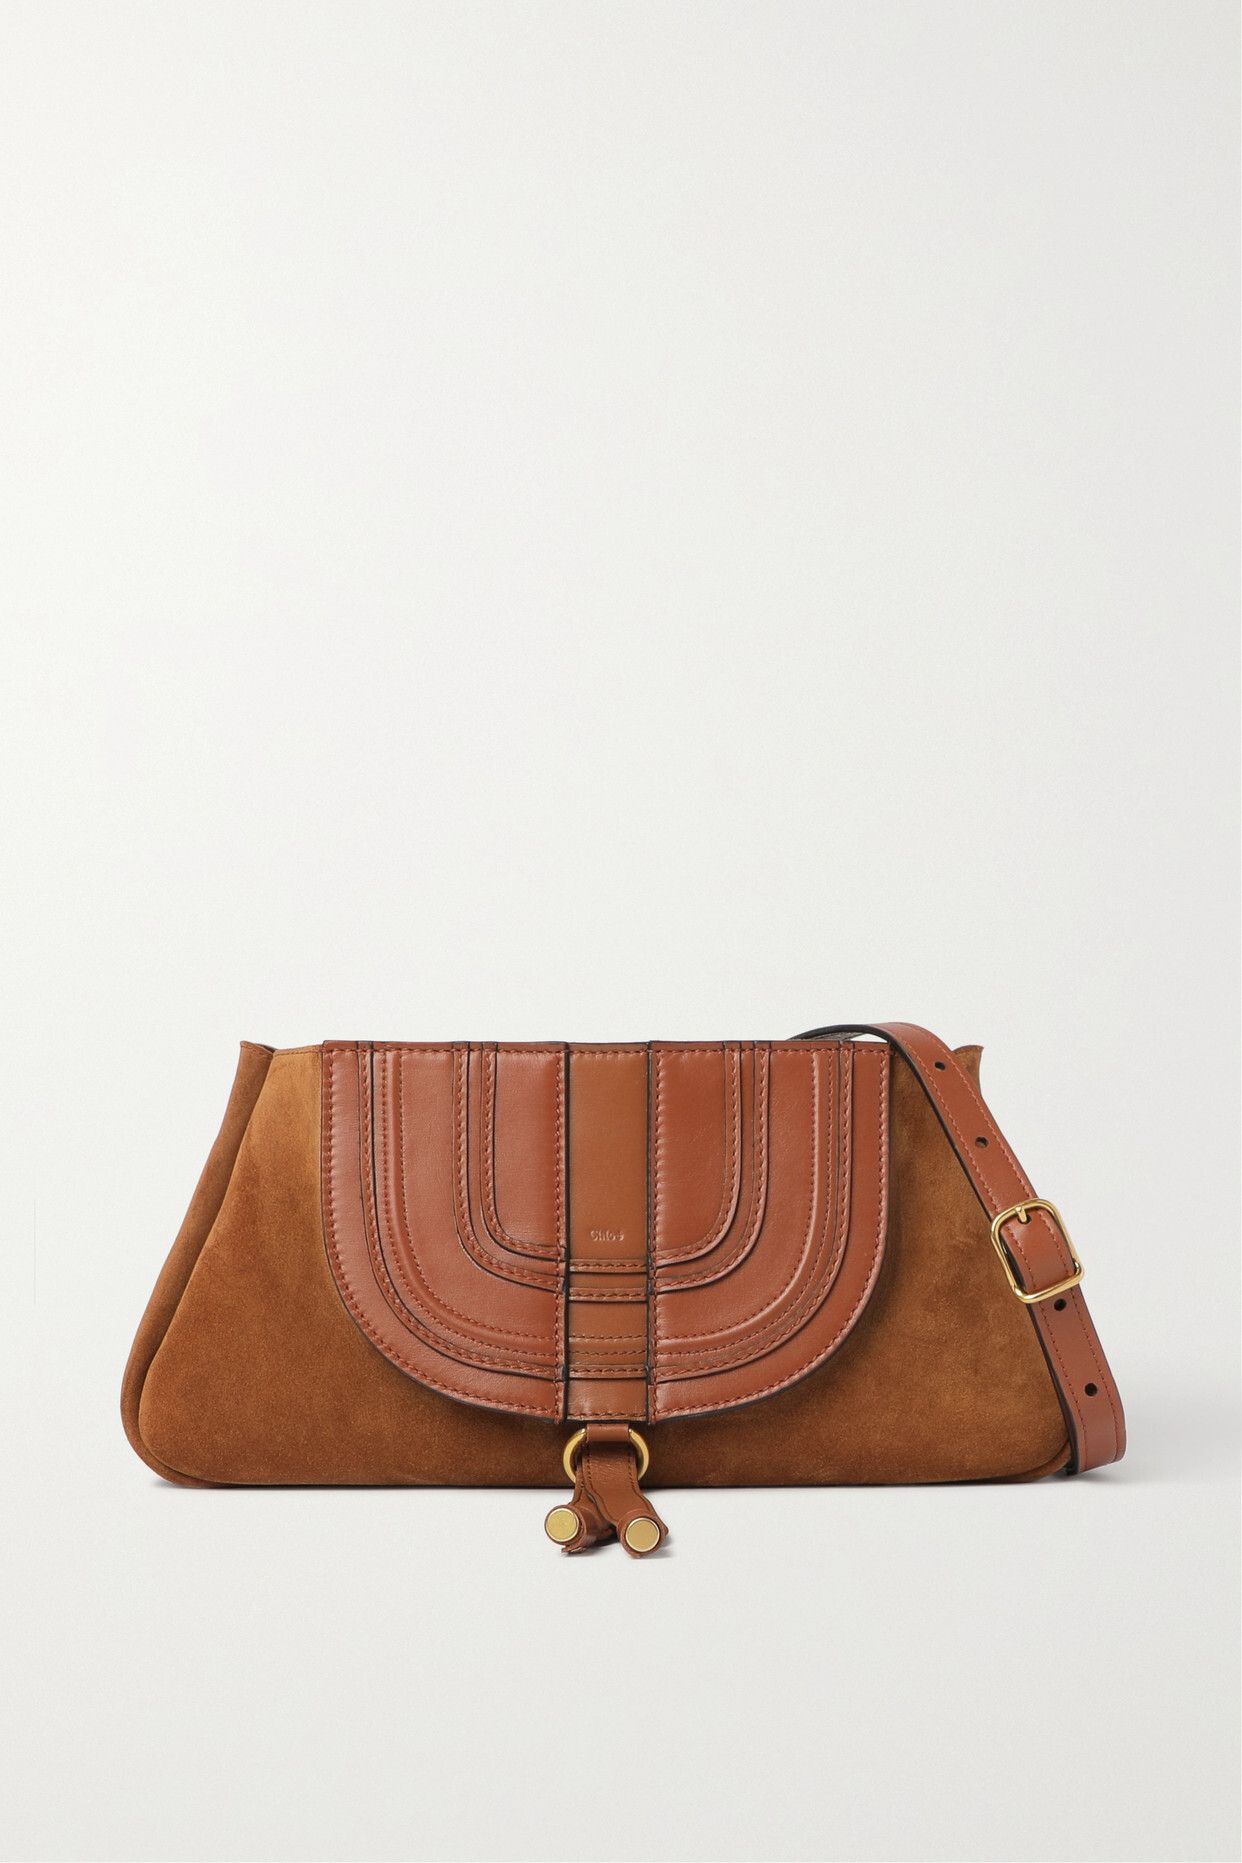 Chloé Chloé - Marcie Tasseled Leather And Suede Shoulder Bag - Brown